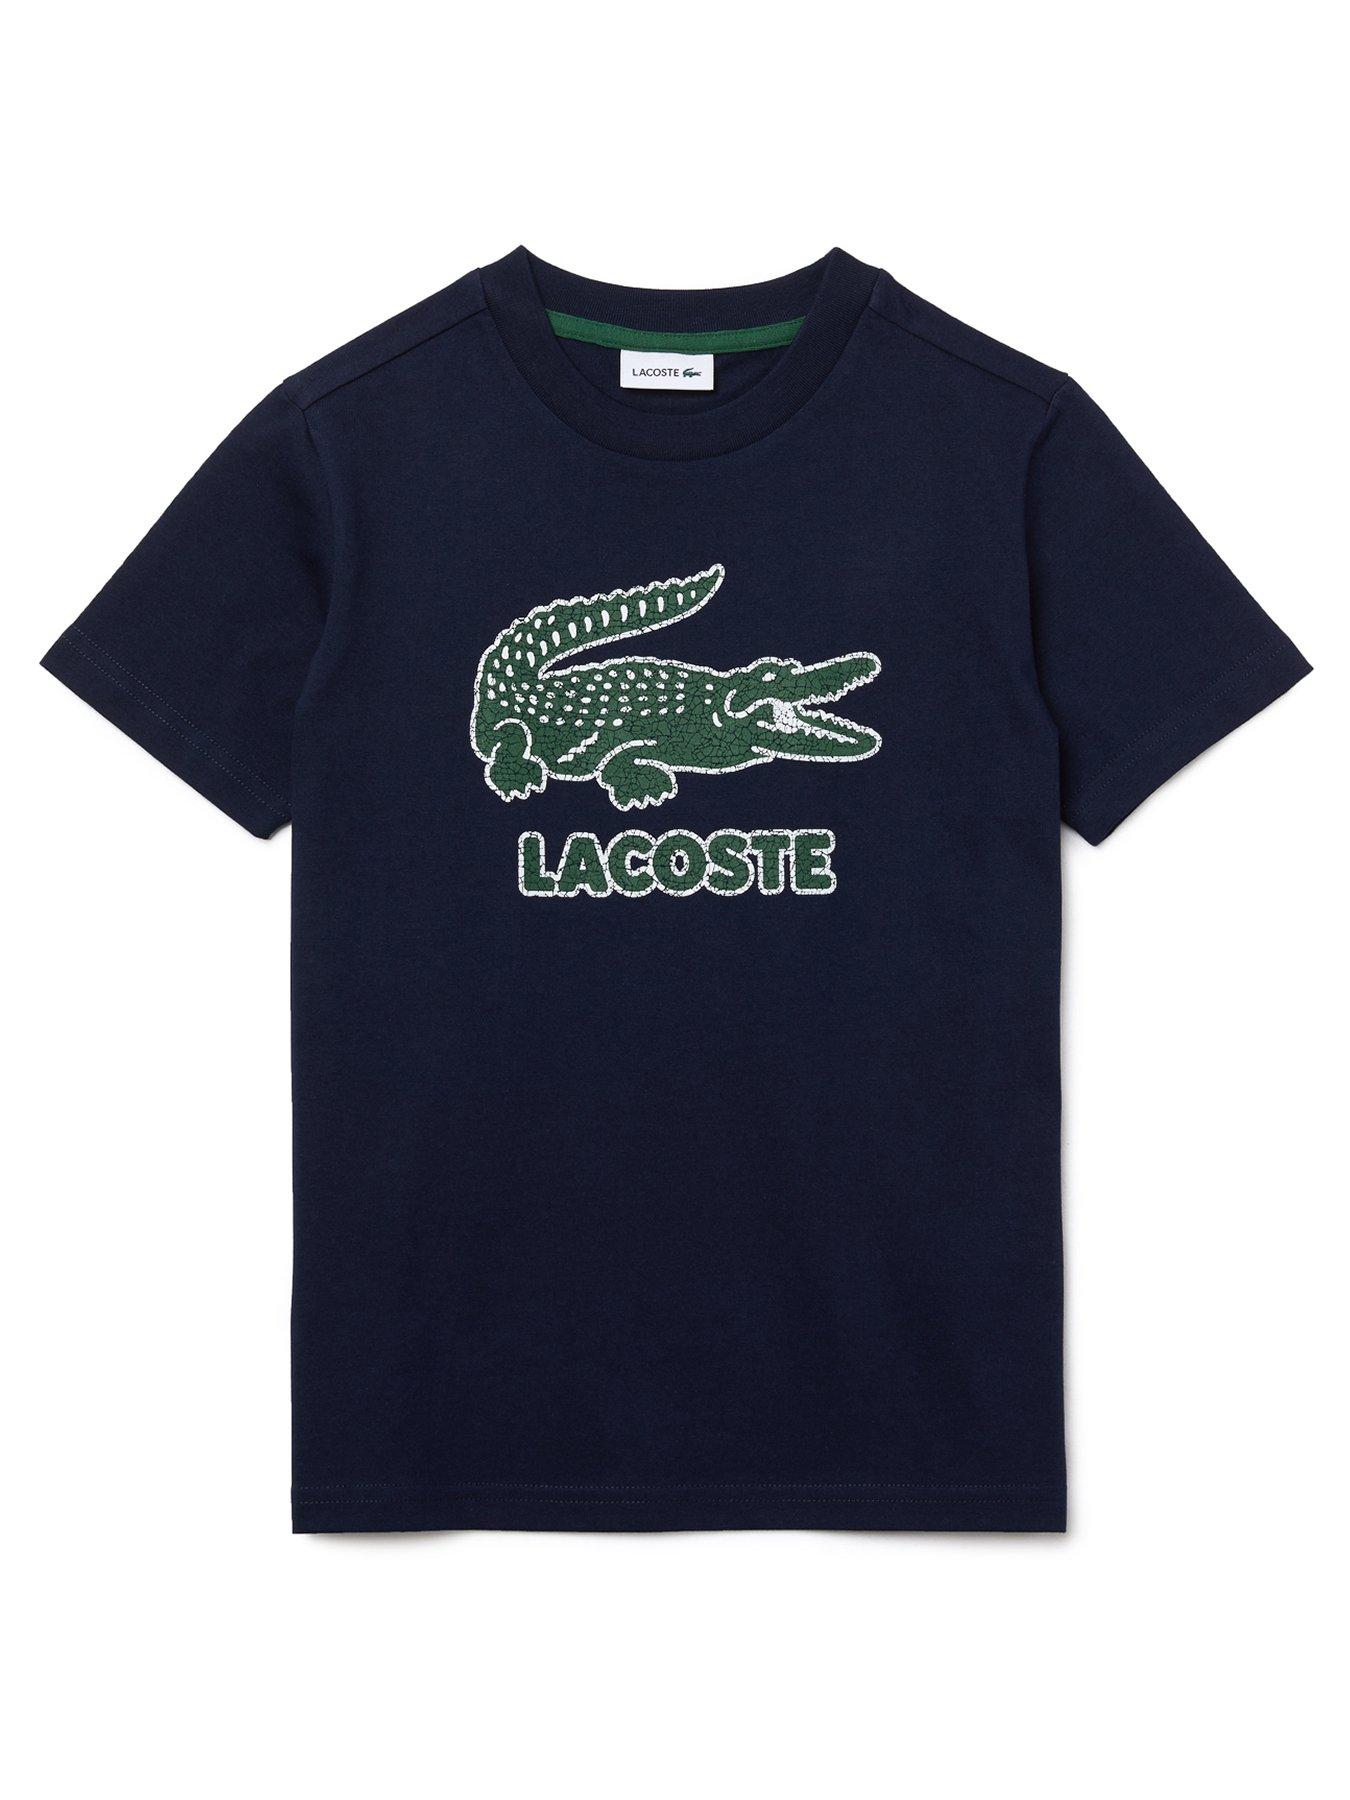  Boys Croc Large Logo T-shirt - Navy